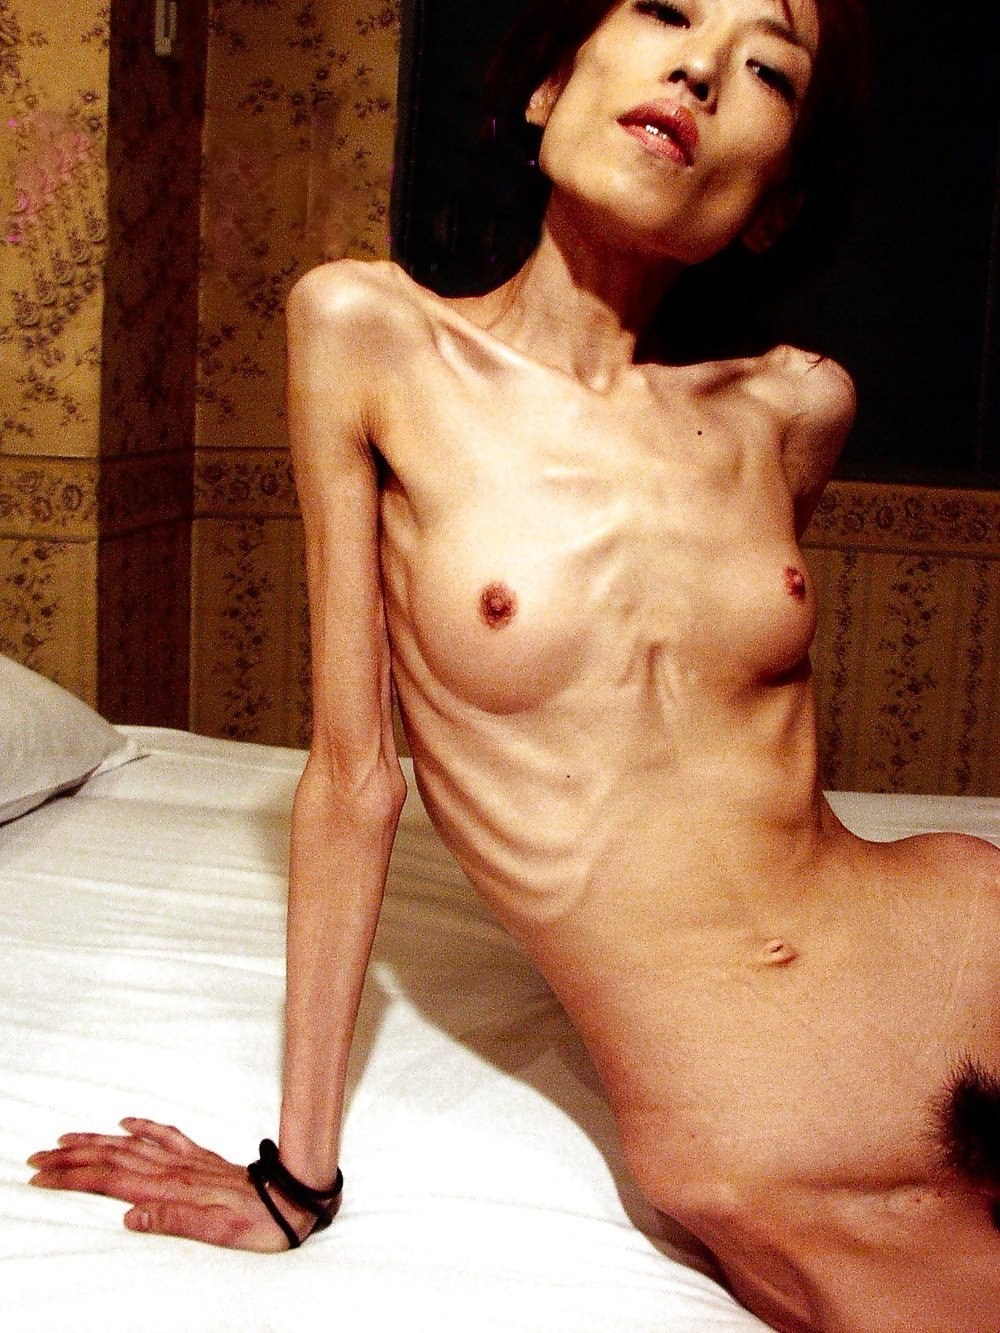 Anorexic Japanese Porn Star - Anorexic Girl Erotica (88 photos) - motherless porn pics